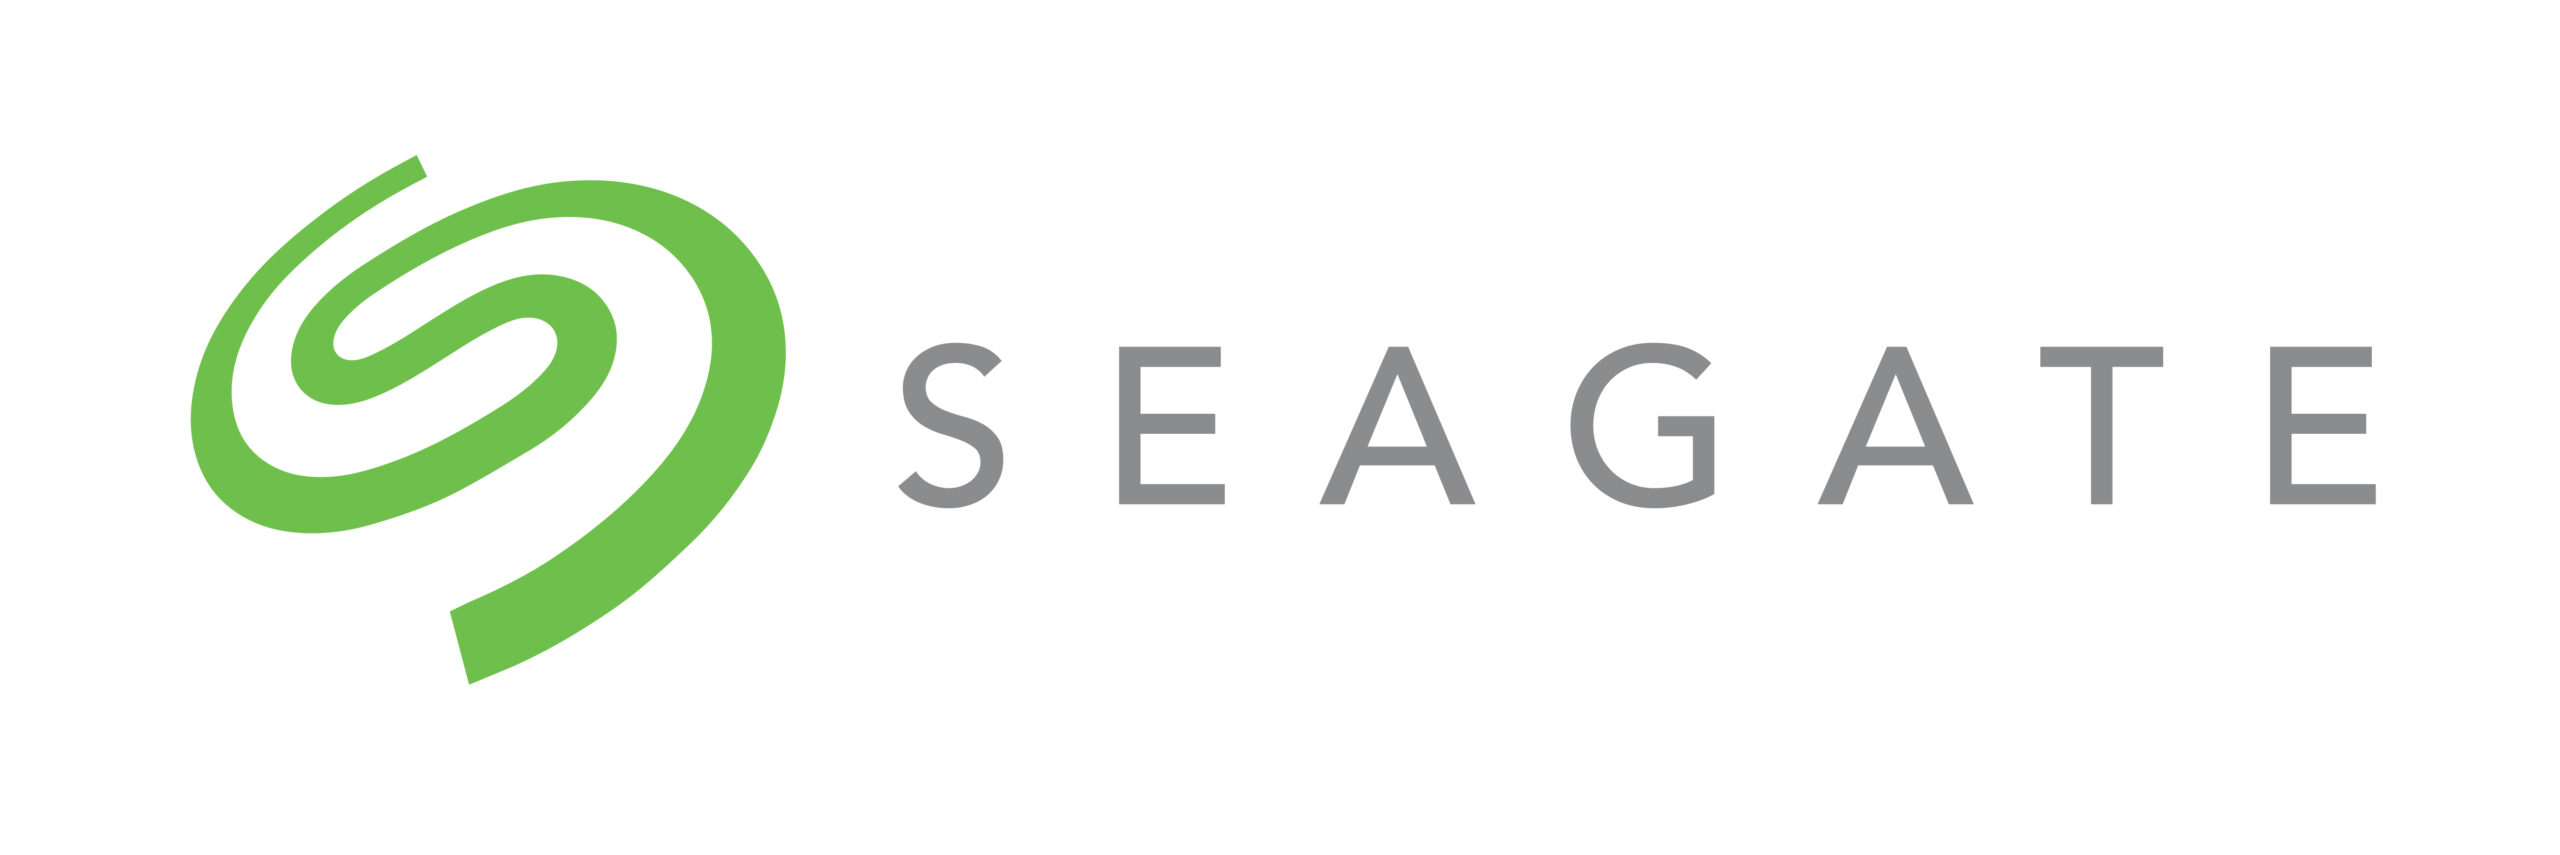 Seagate Careers